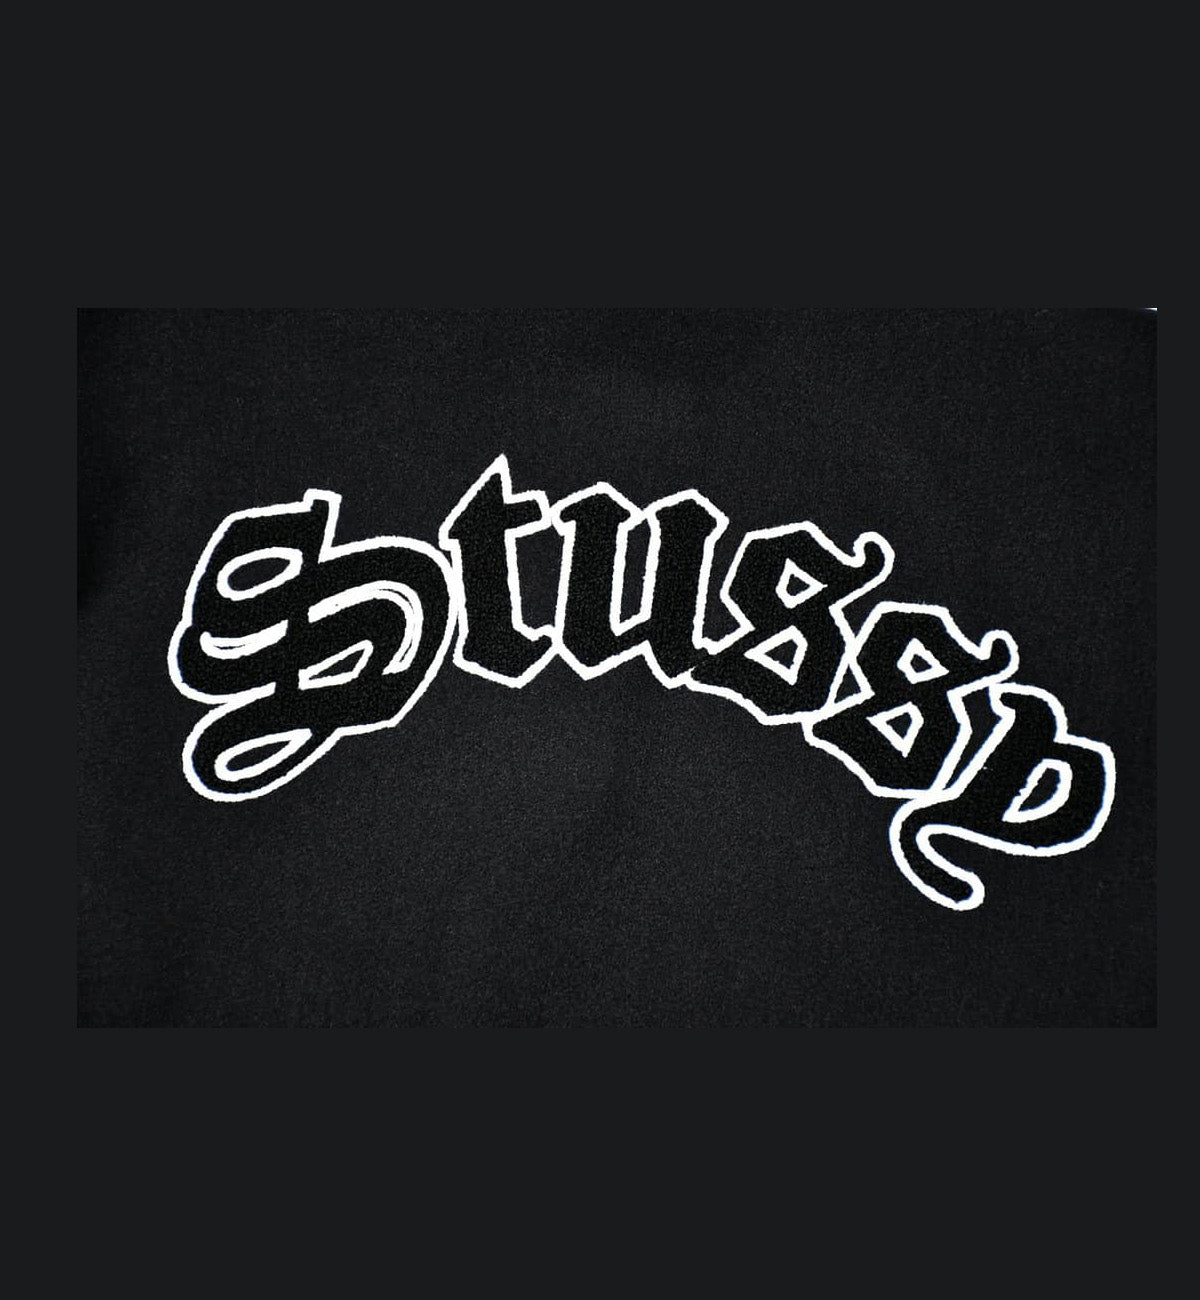 Stussy Casentino Wool Jacket FW22 (Black)